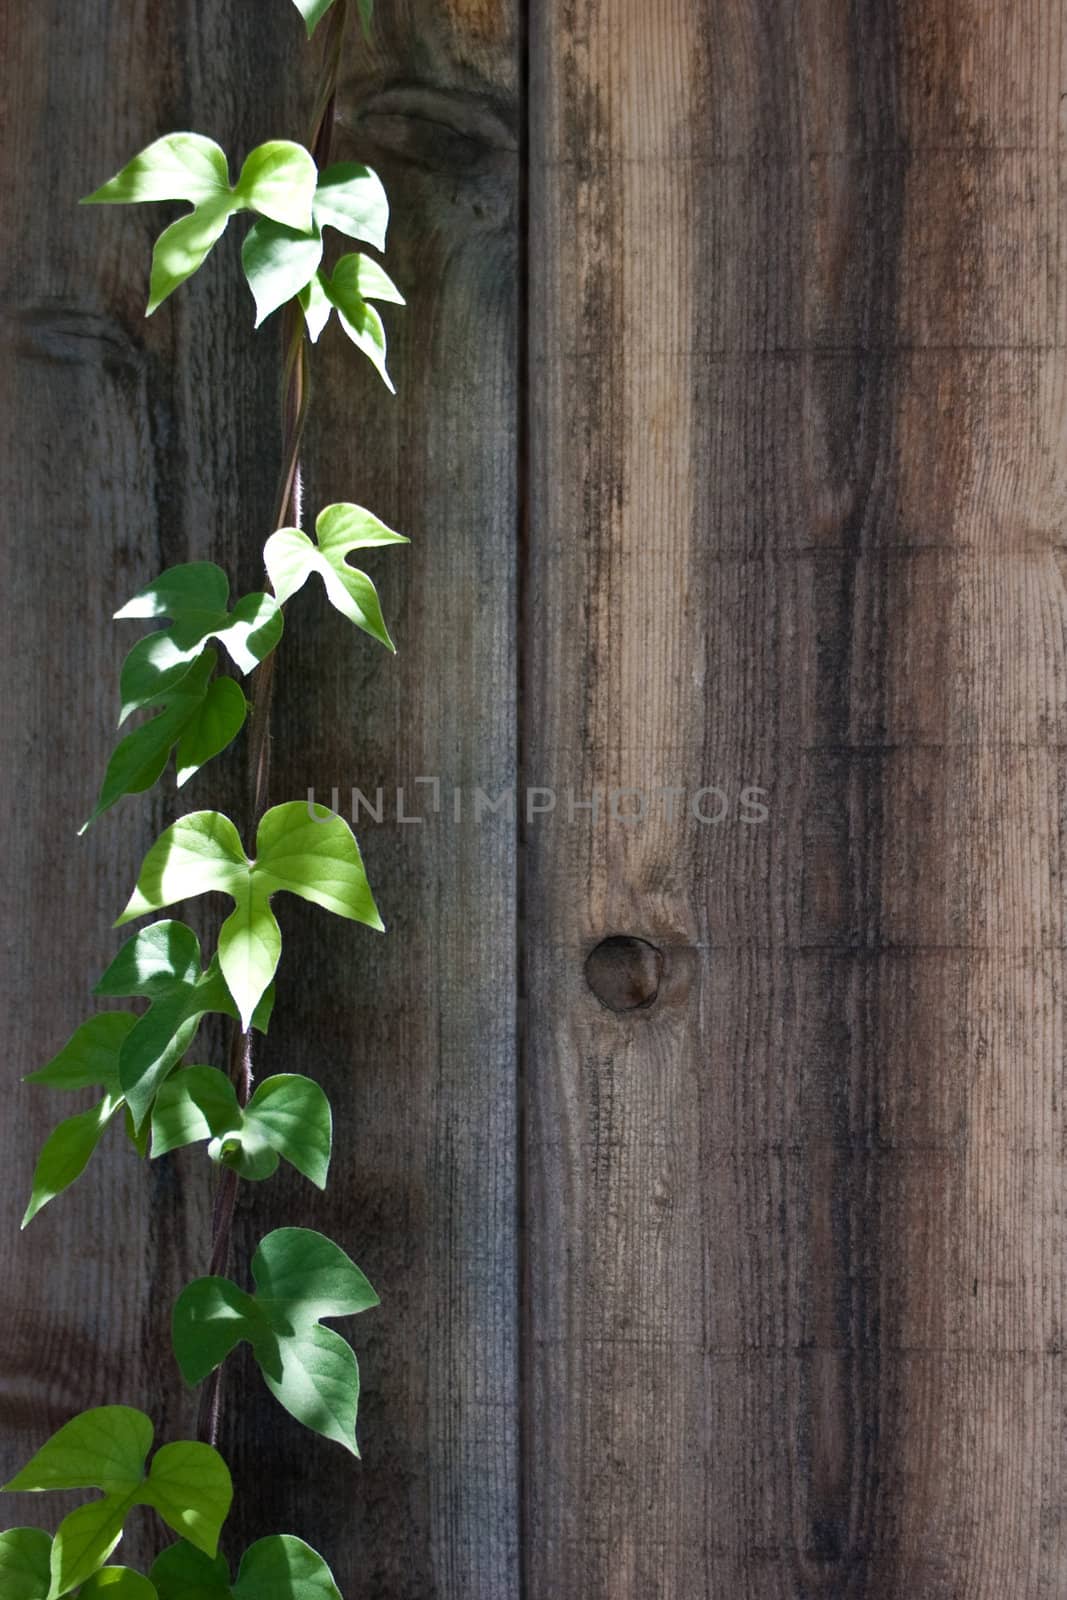 A single vine climbing a wooden fence.